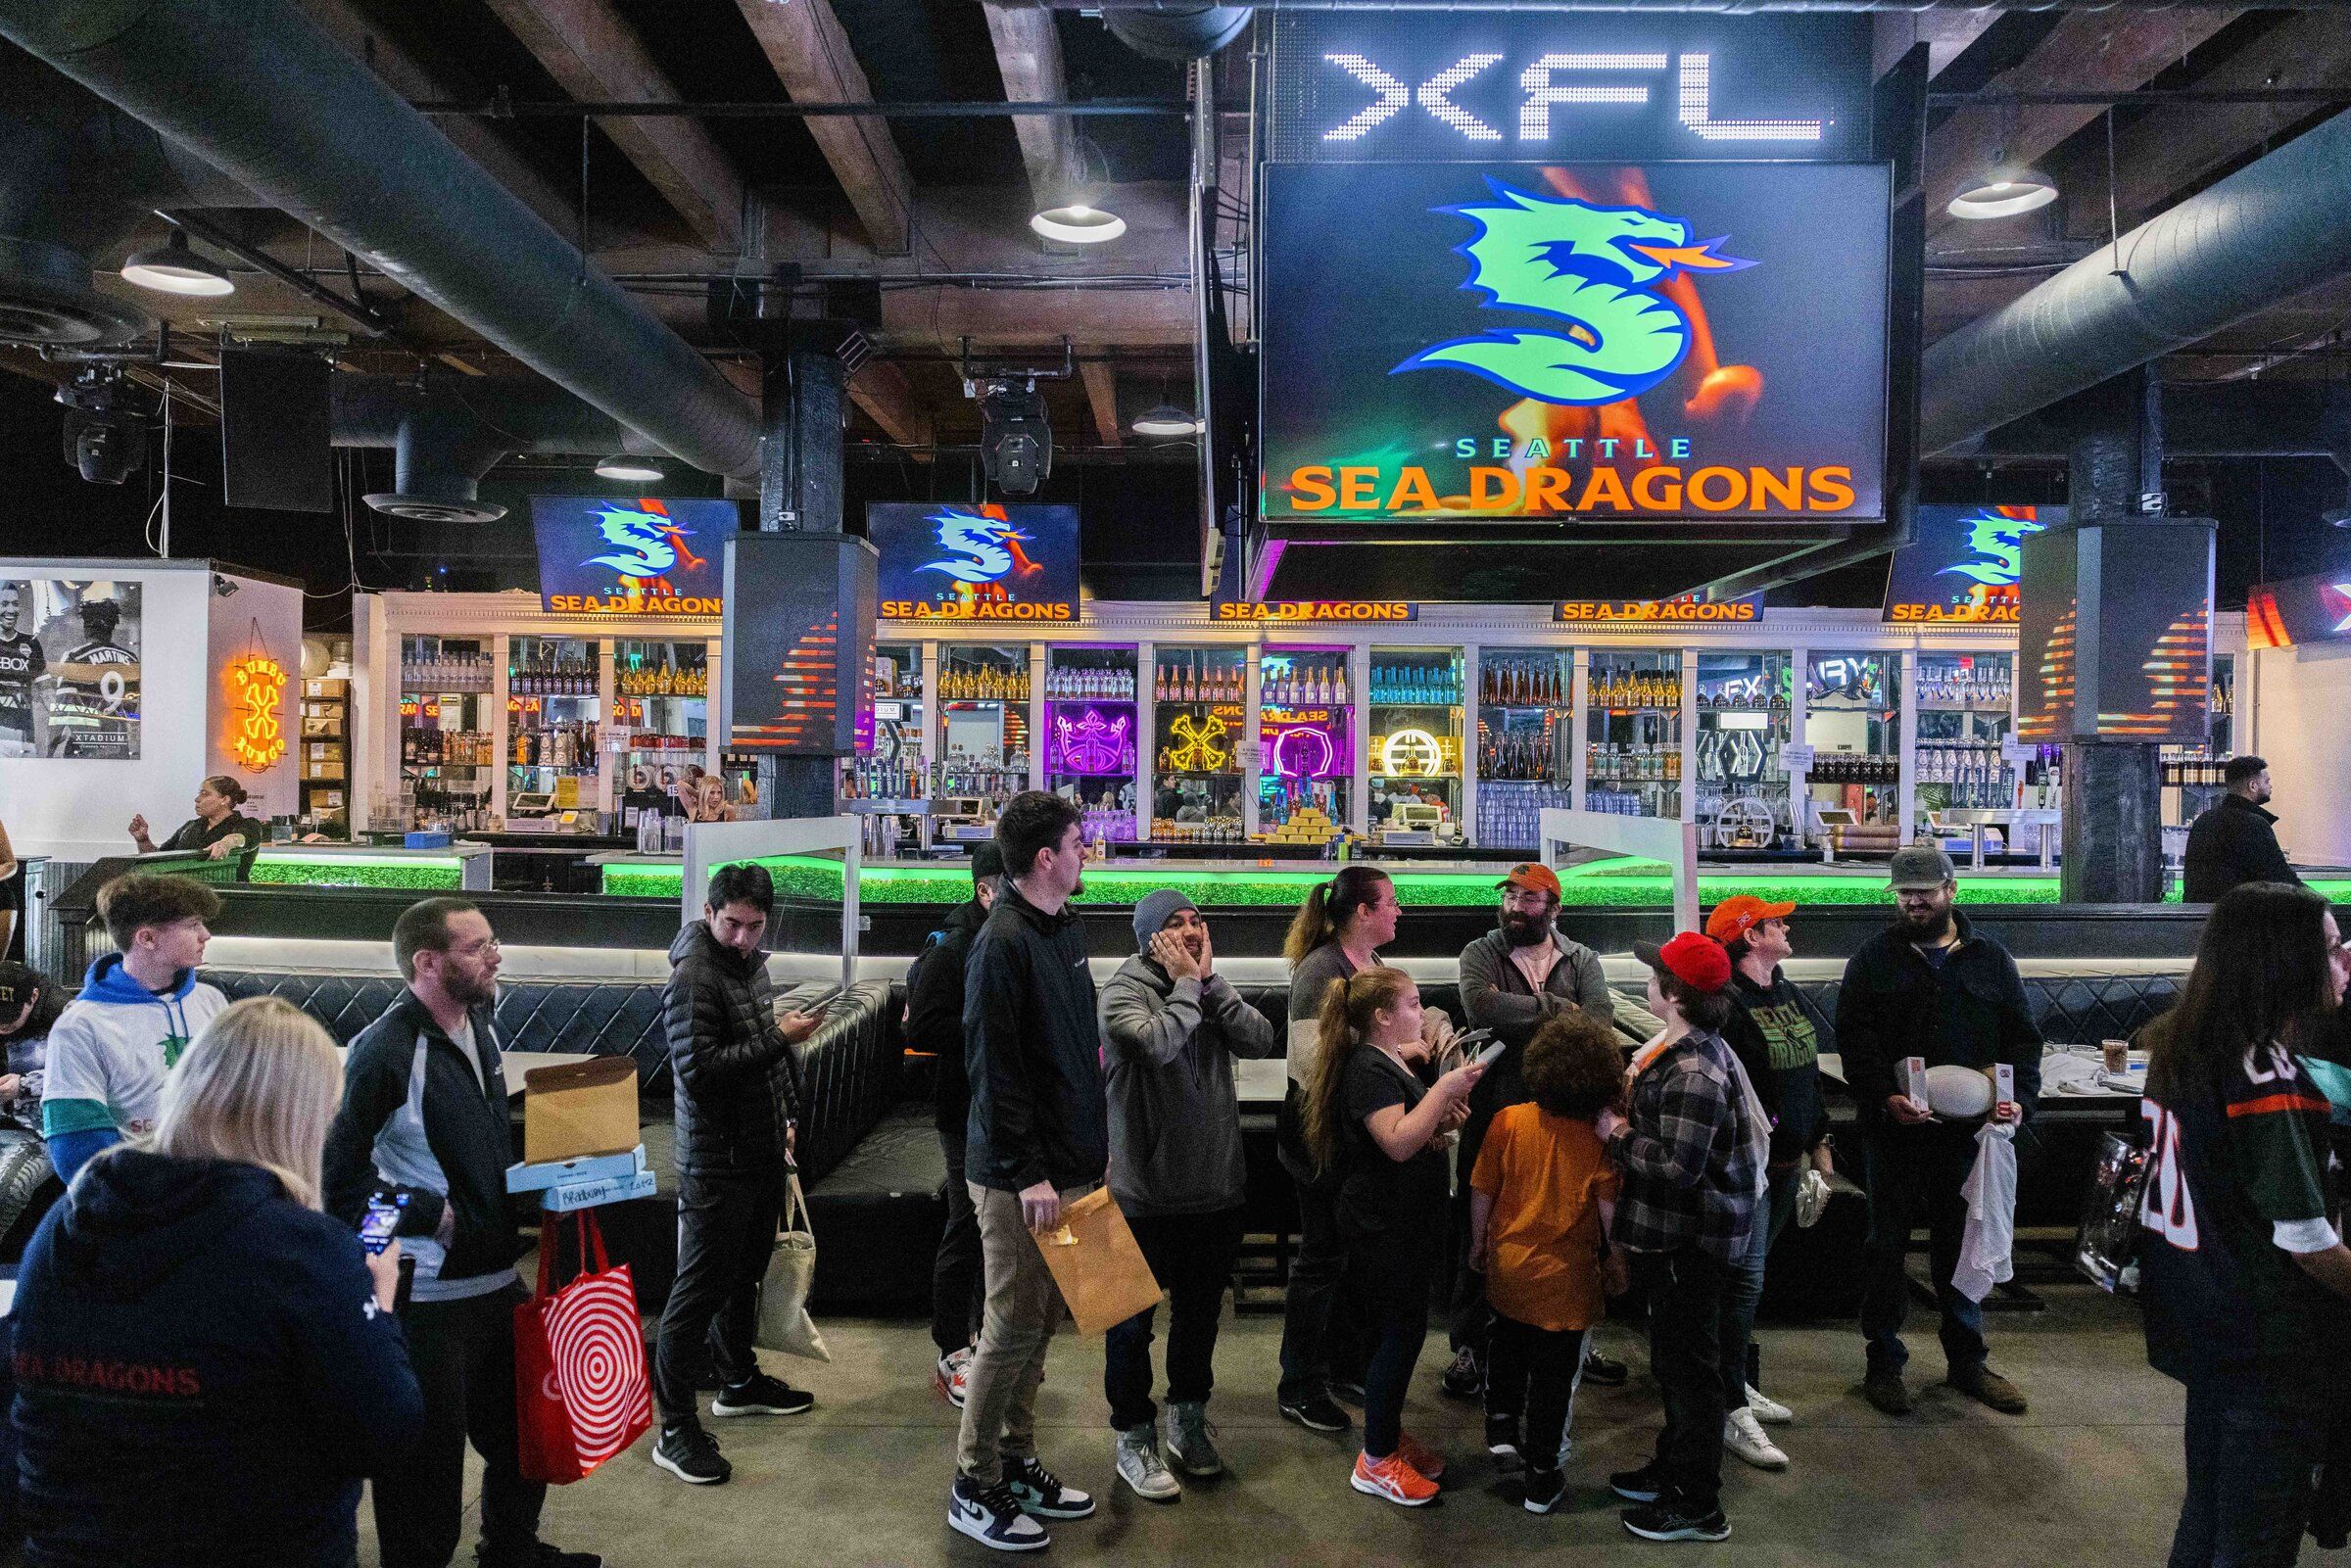 It's a fan #WallpaperWednesday to - Seattle Sea Dragons